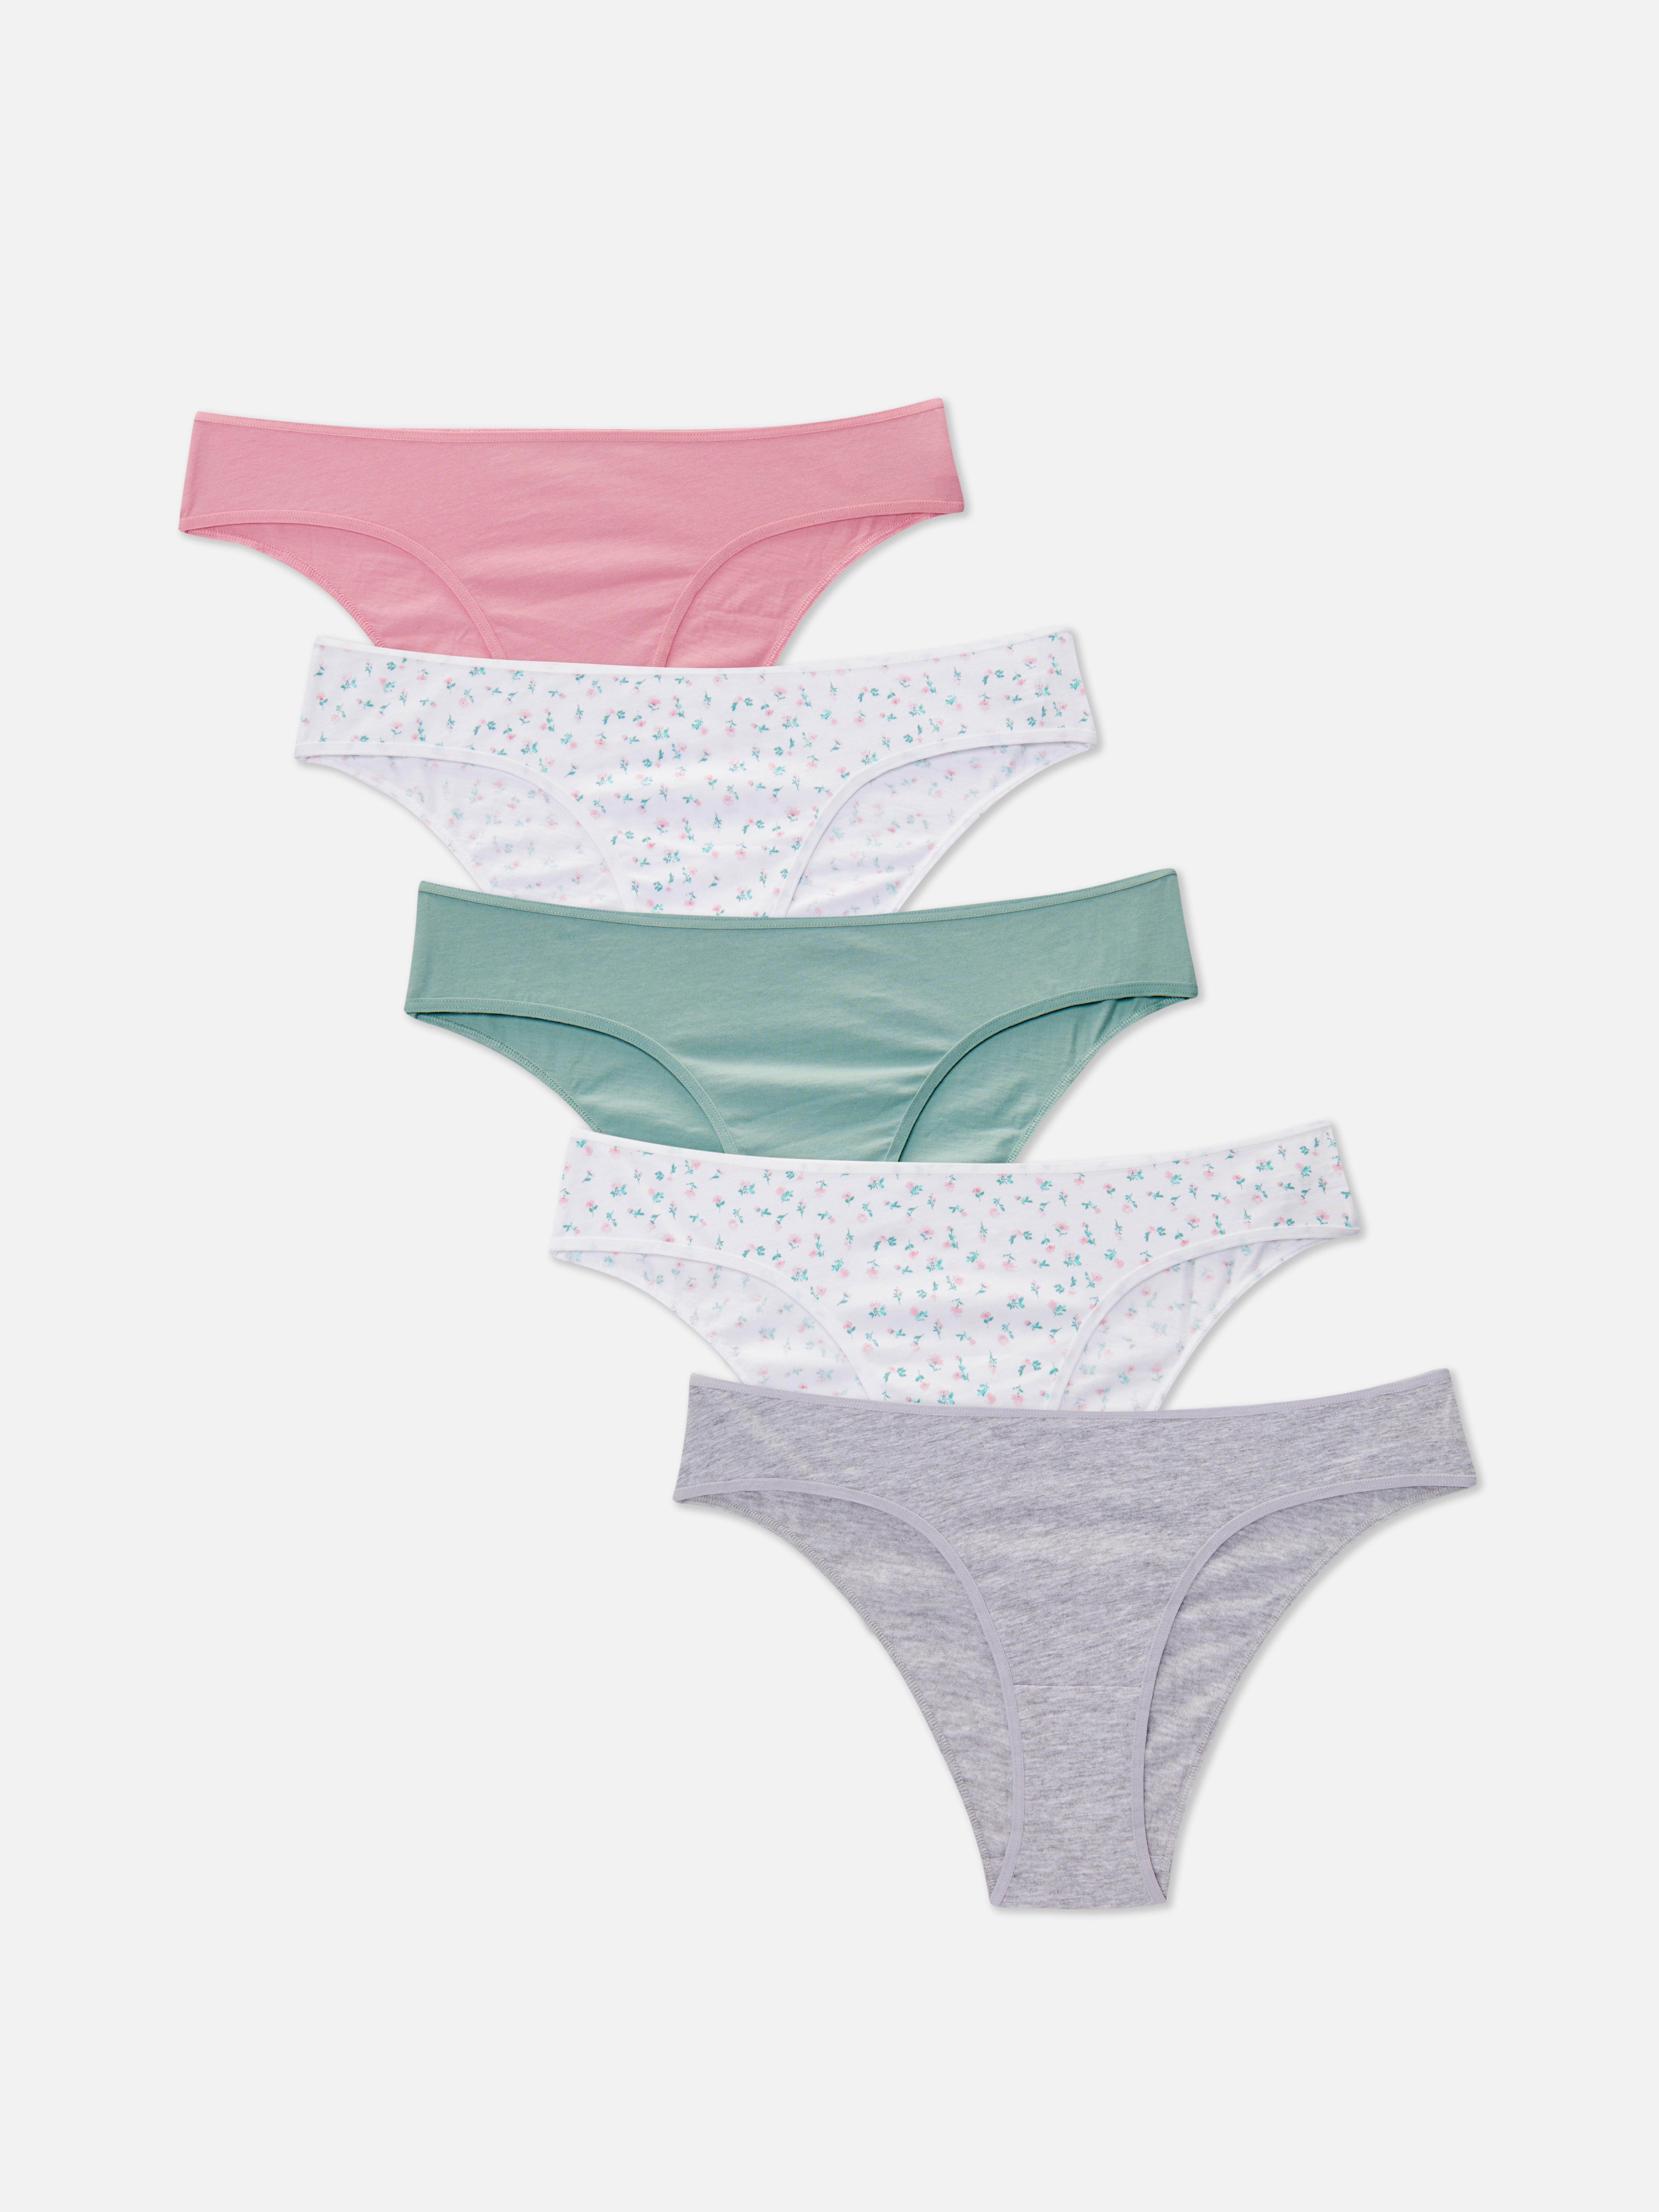 Women underwear : Women brazilian briefs Nature Soft peach